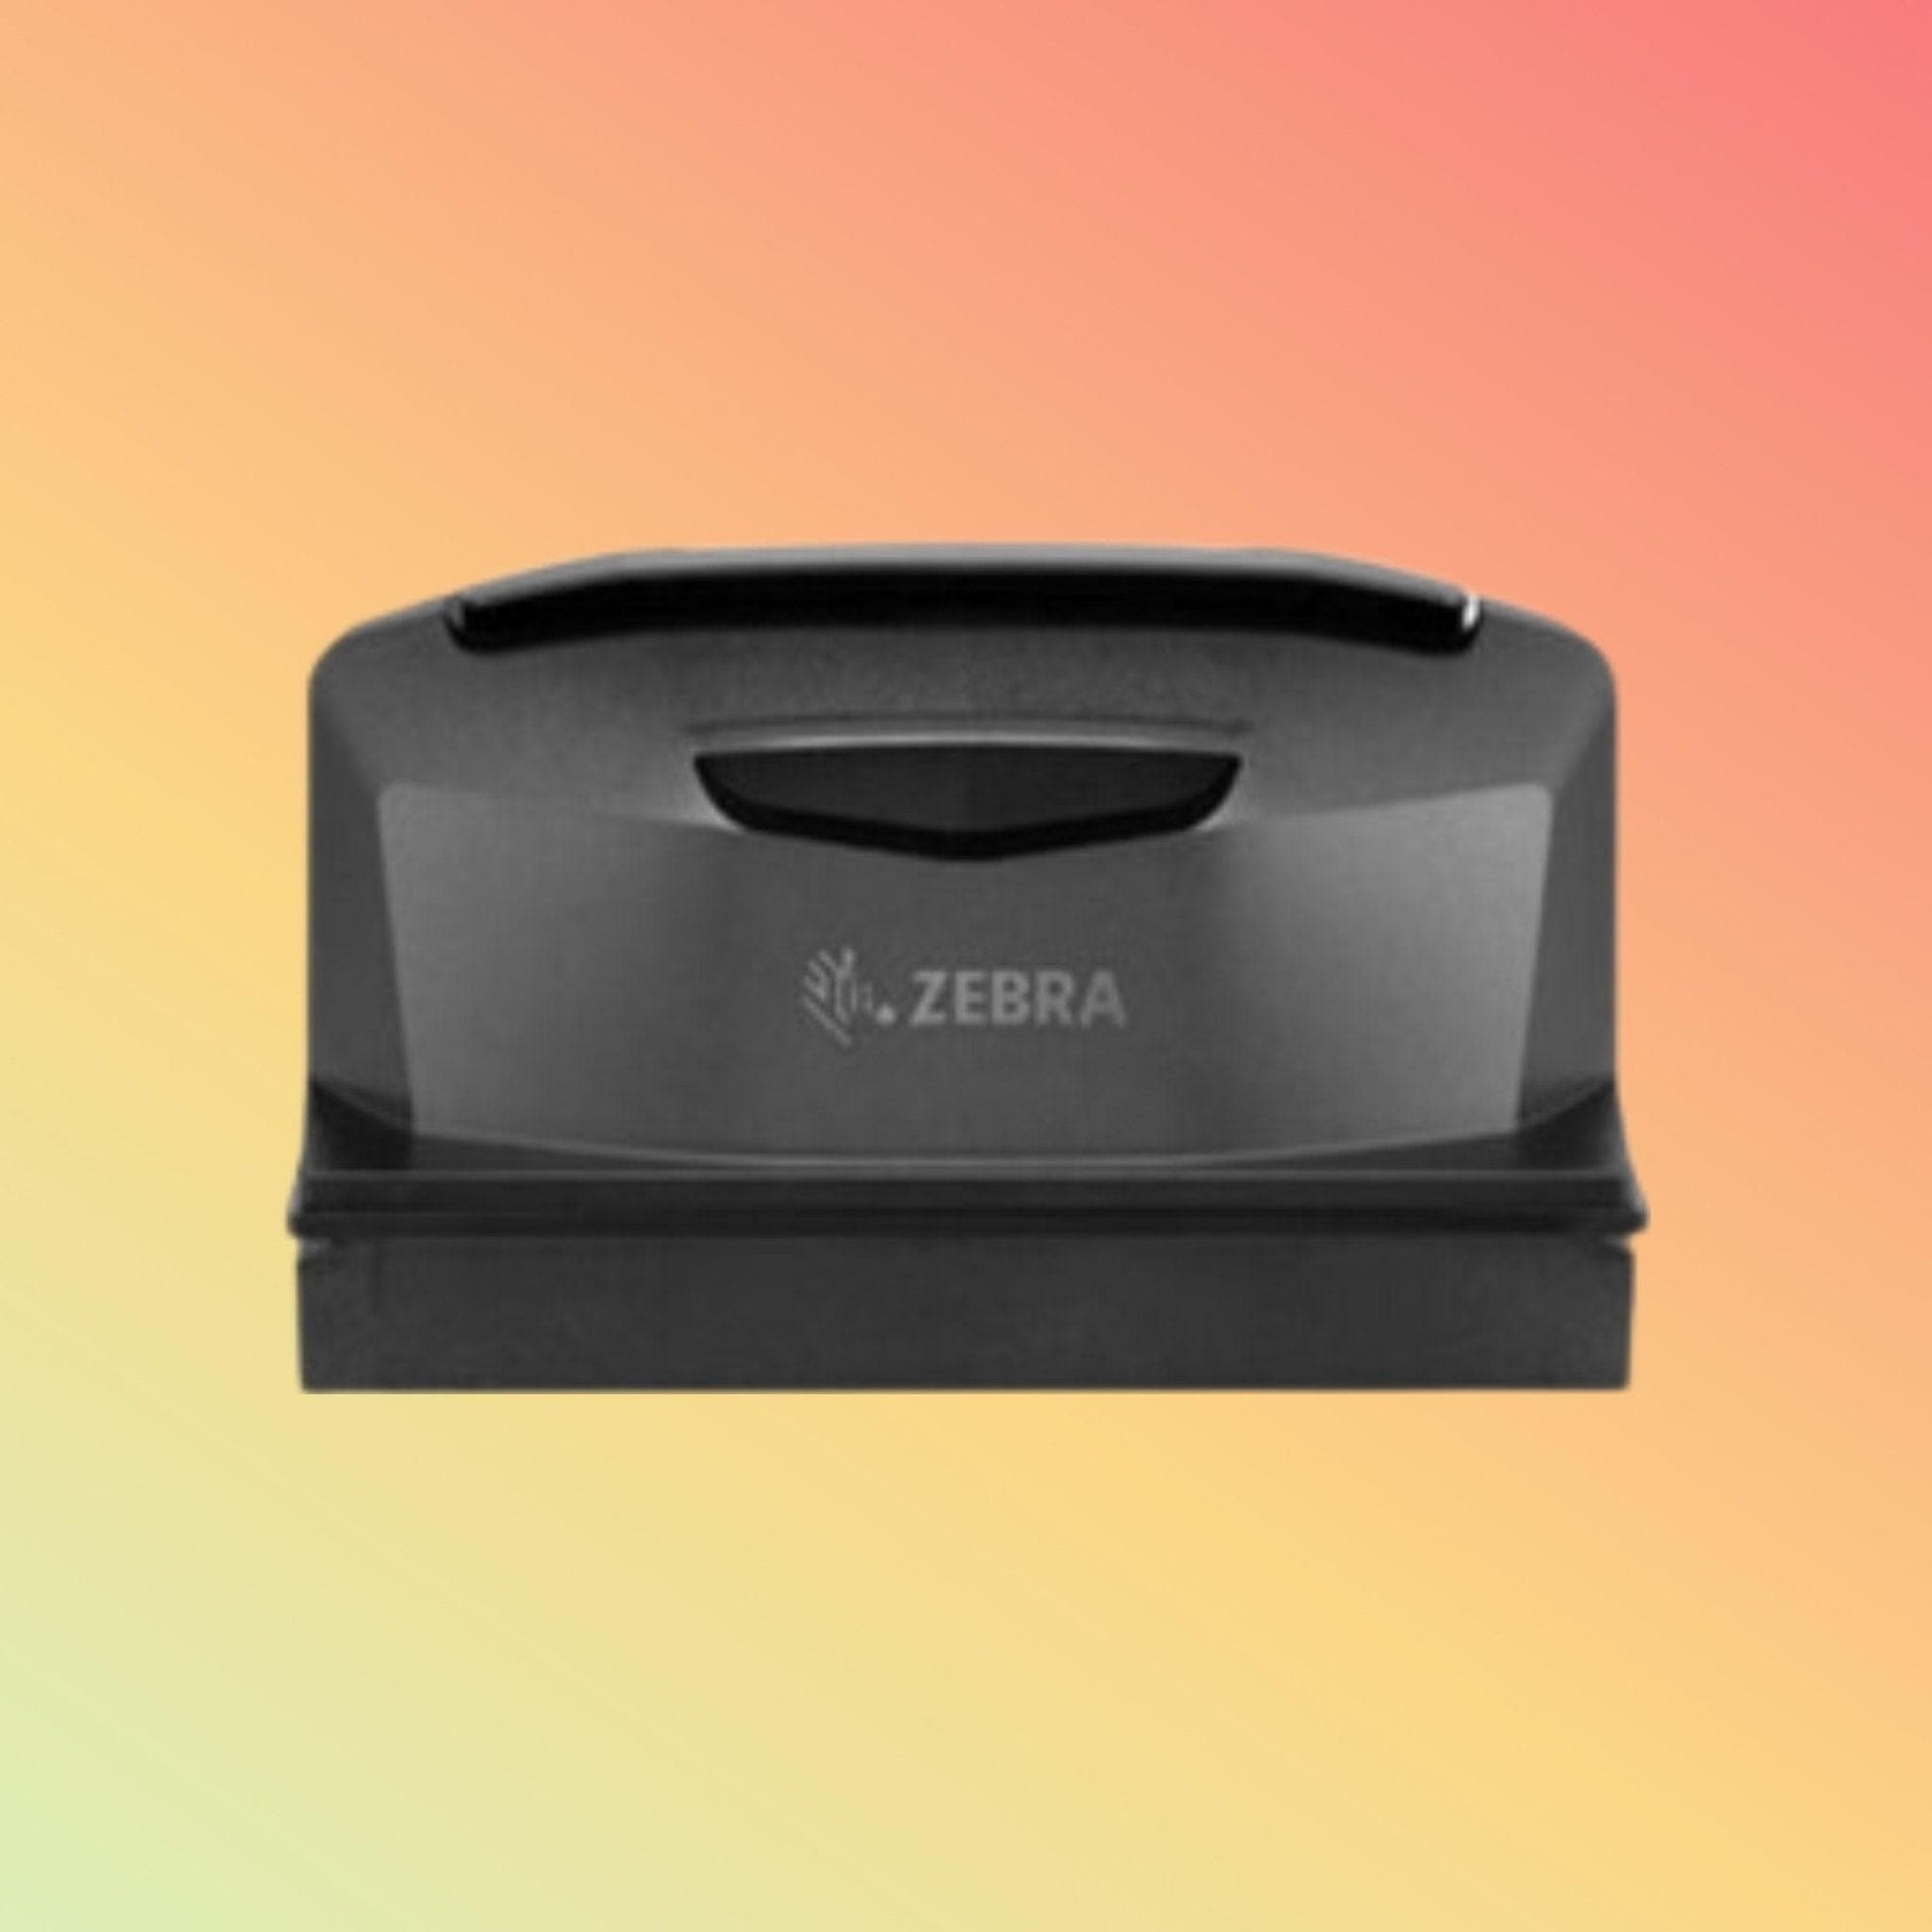 Barcode Scanner - Zebra MP7000 - Neotech